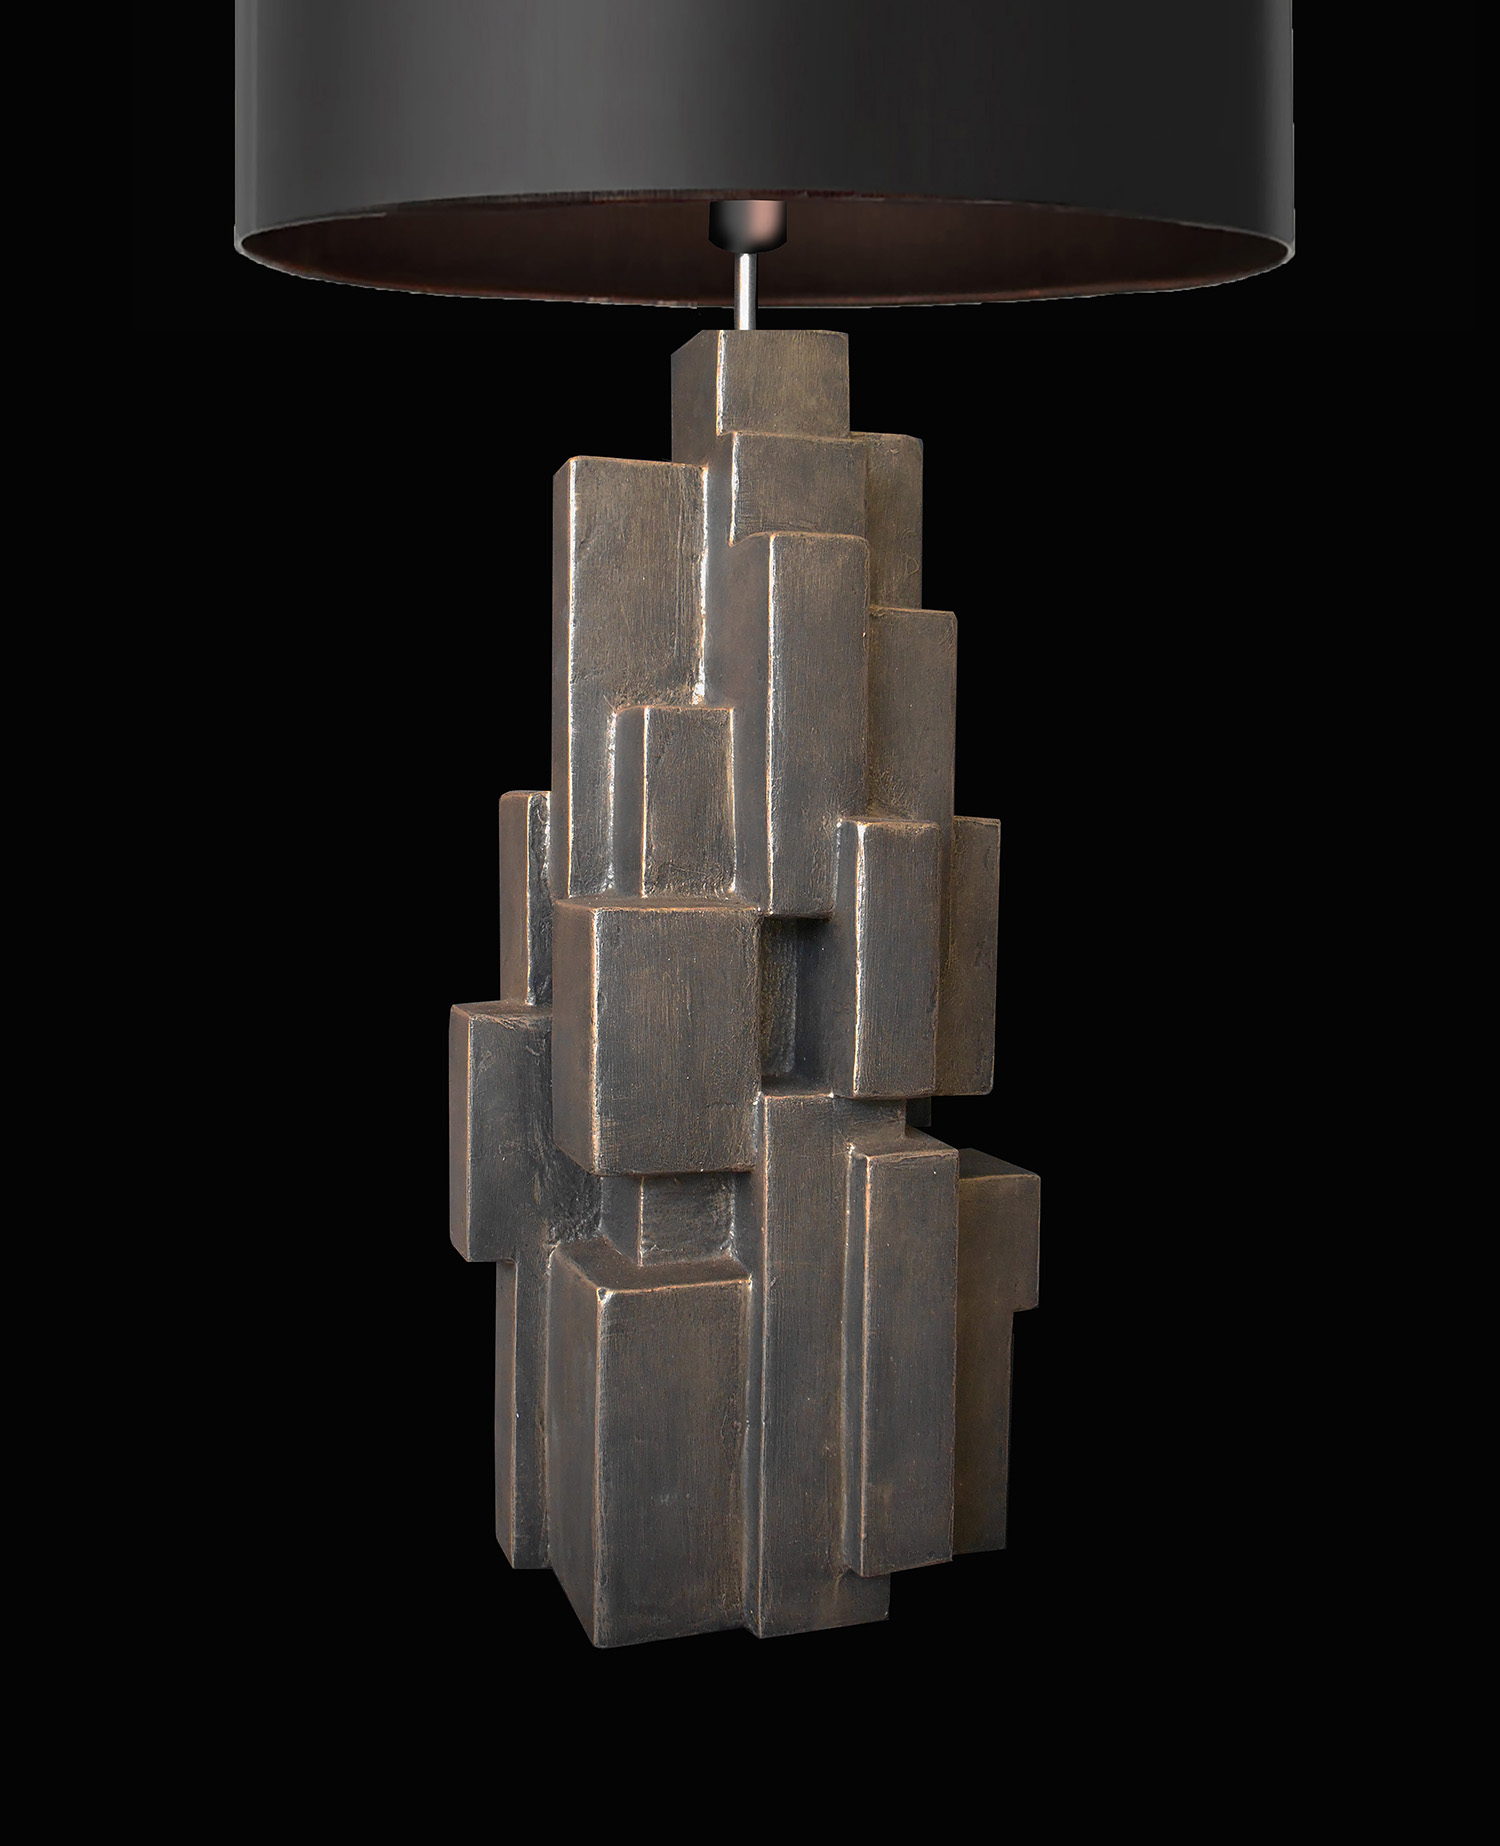 GEO TABLE LAMP, detail, 2018